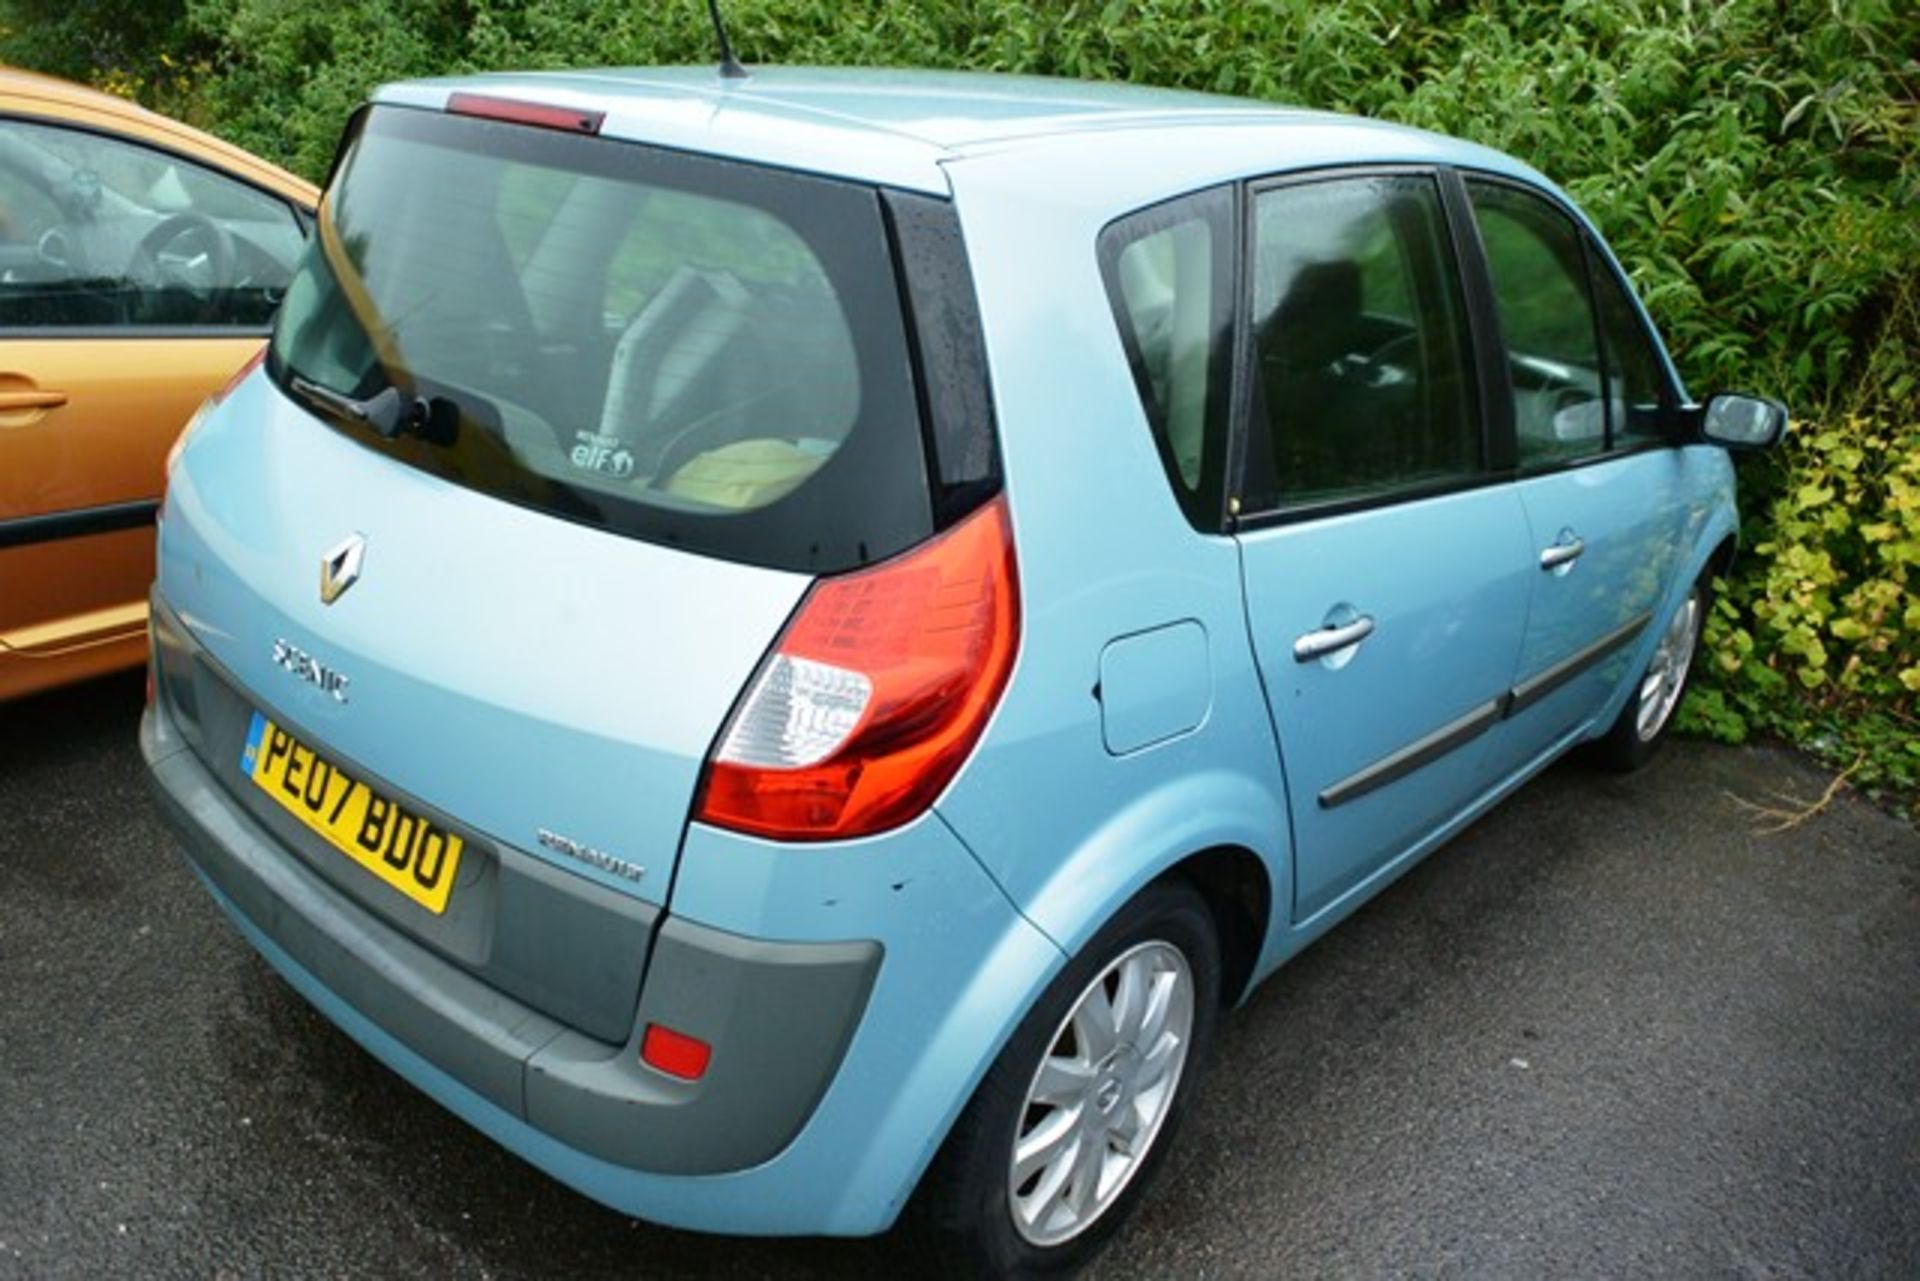 Renault Scenic 1.6 petrol 5 door MPV, reg no: PC07 EDU (2007), MOT: 22/09/2020, recorded mileage: